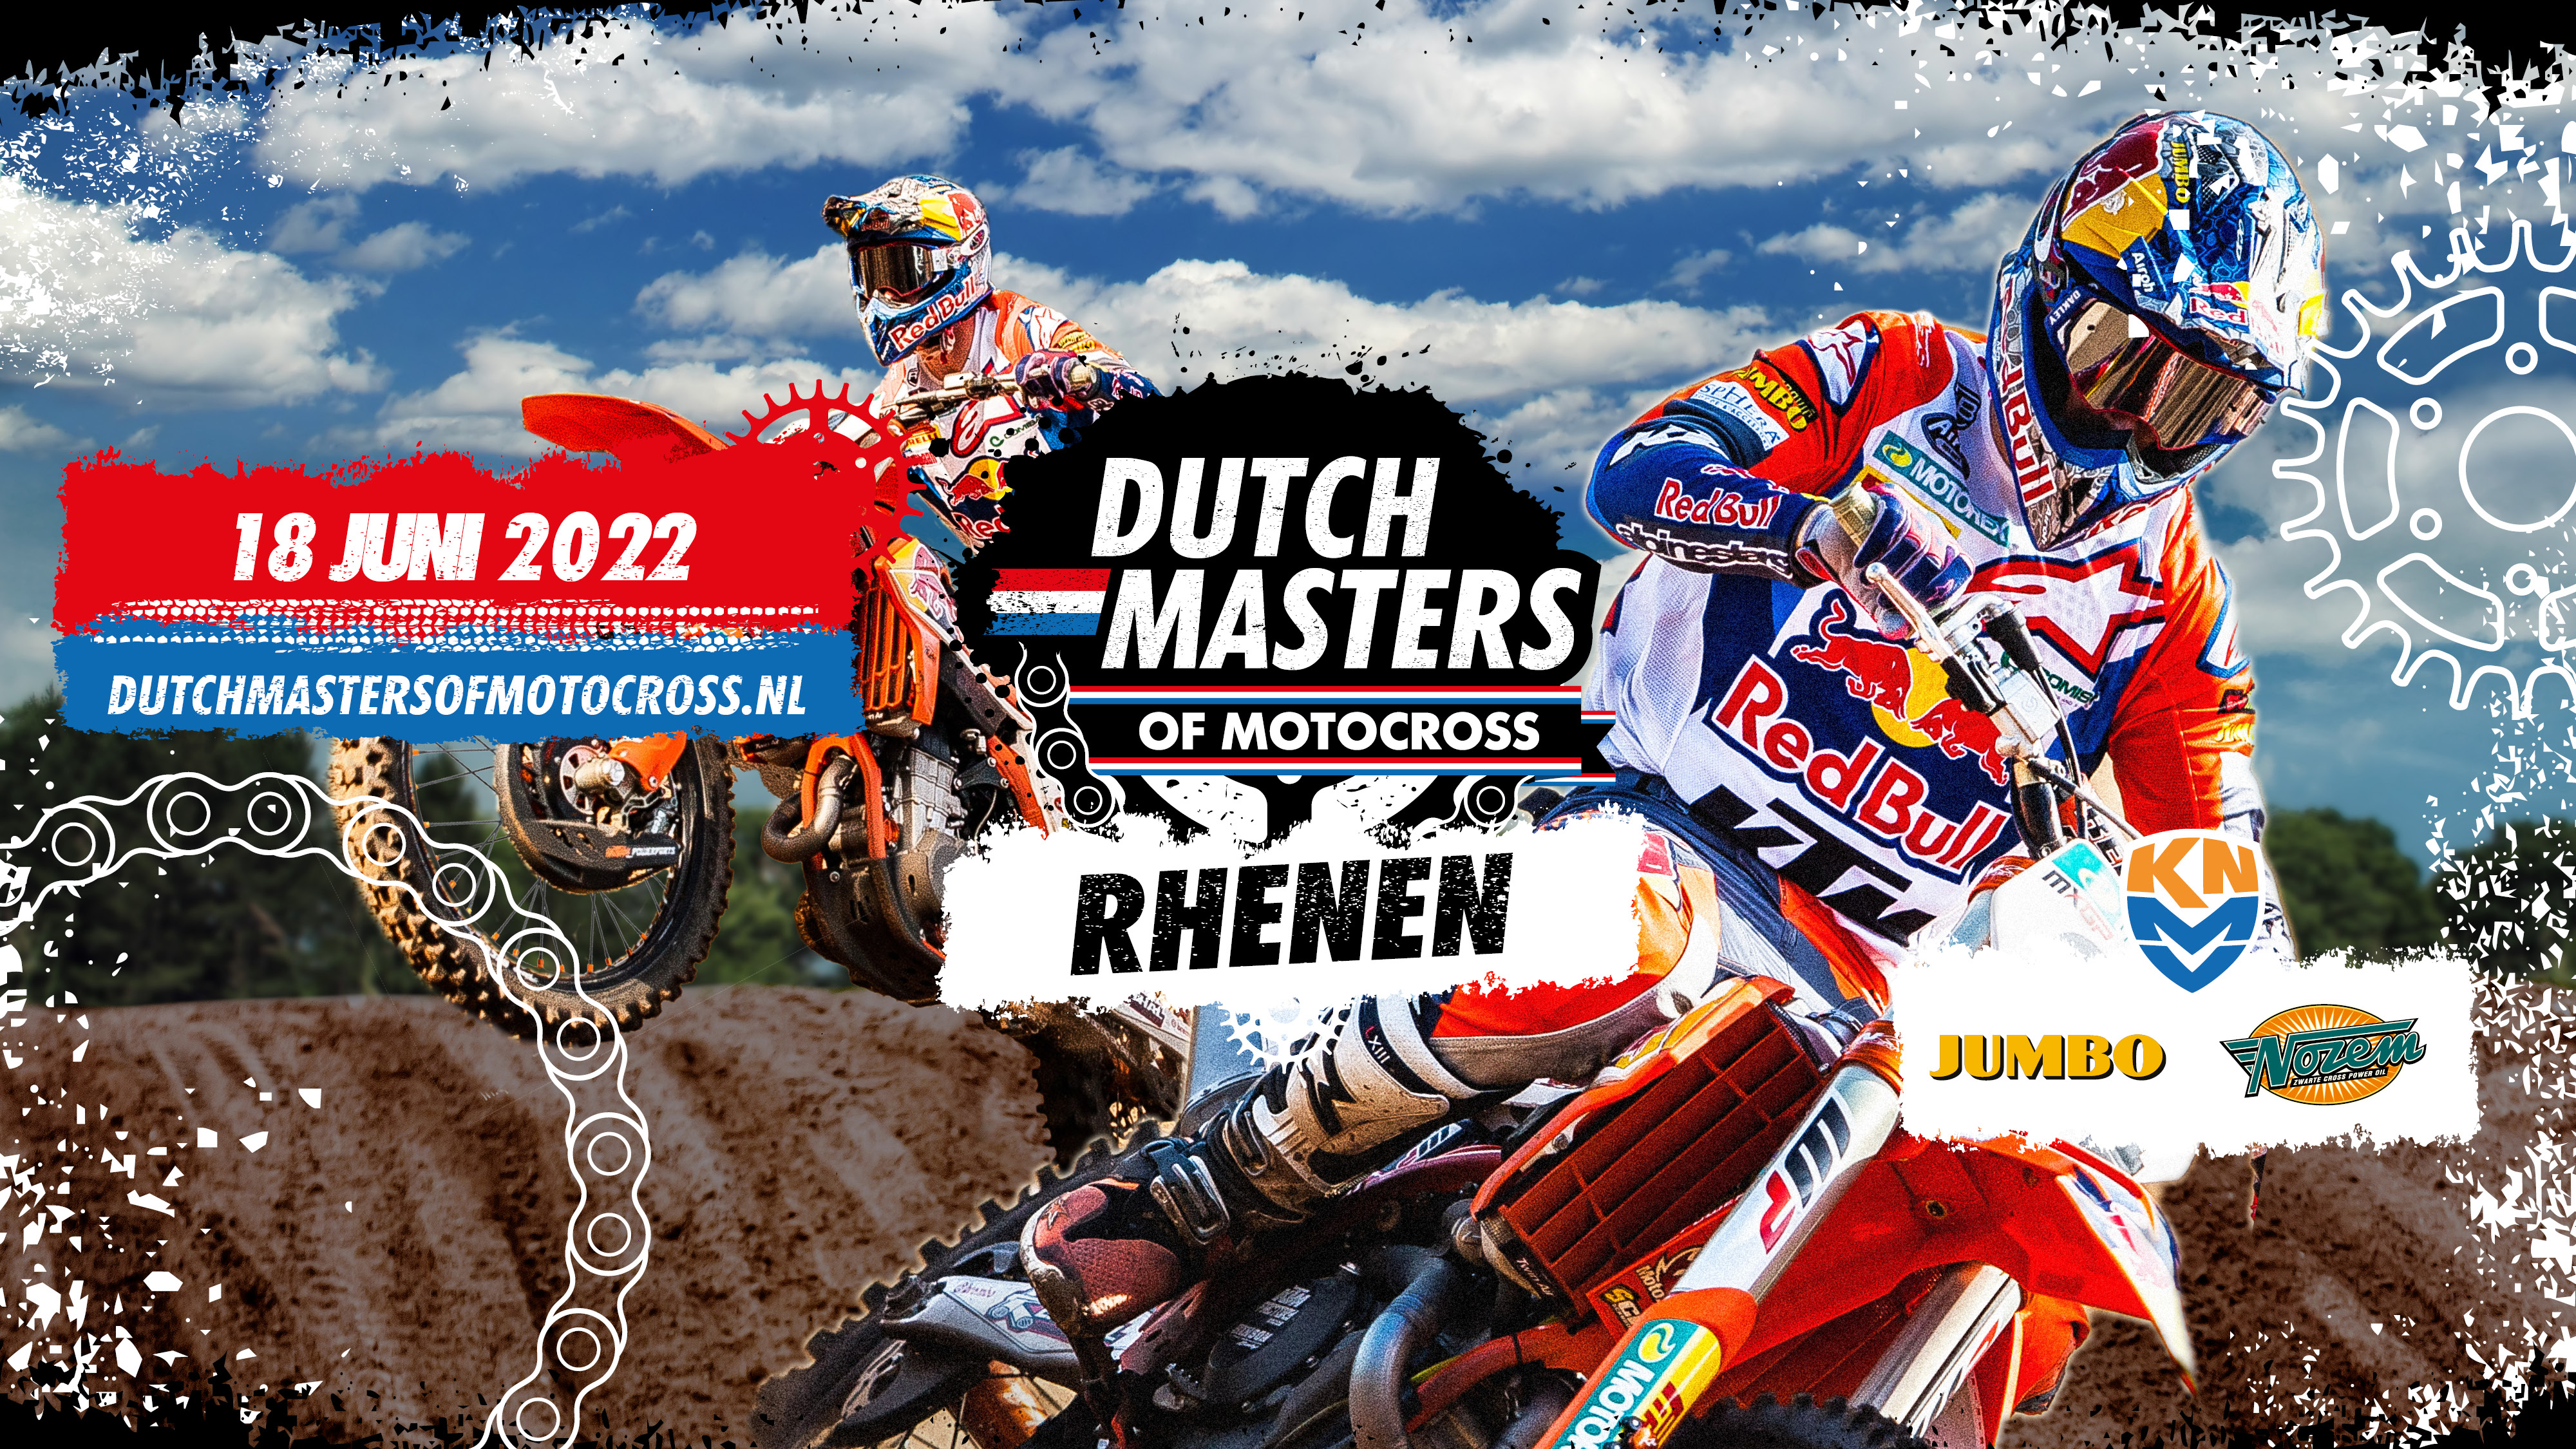 Dutch Masters Of Motocross '22 - Facebook Visual 1920x1080px Rhenen